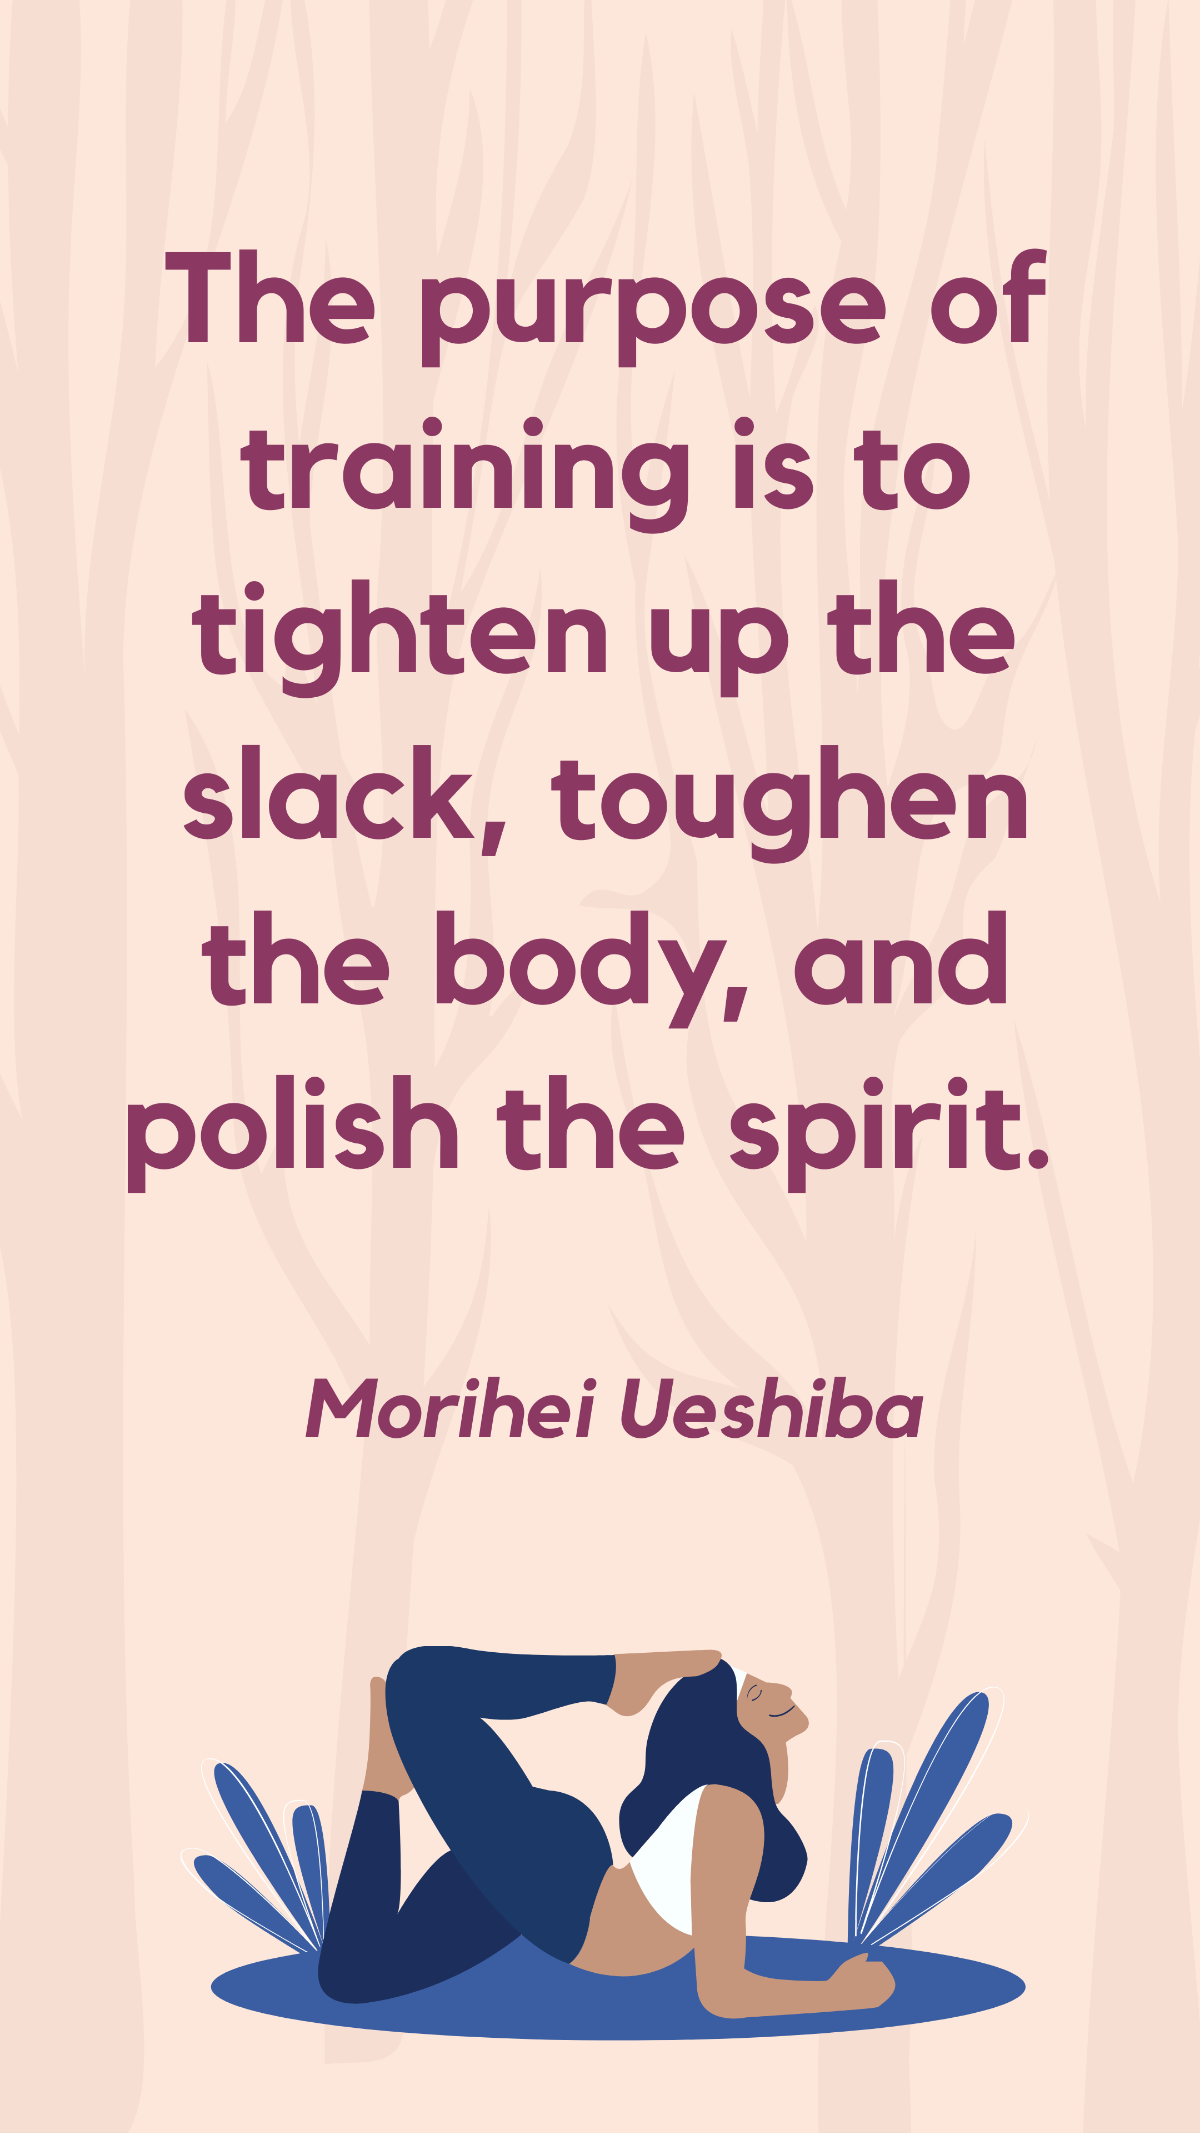 Morihei Ueshiba - The purpose of training is to tighten up the slack, toughen the body, and polish the spirit.